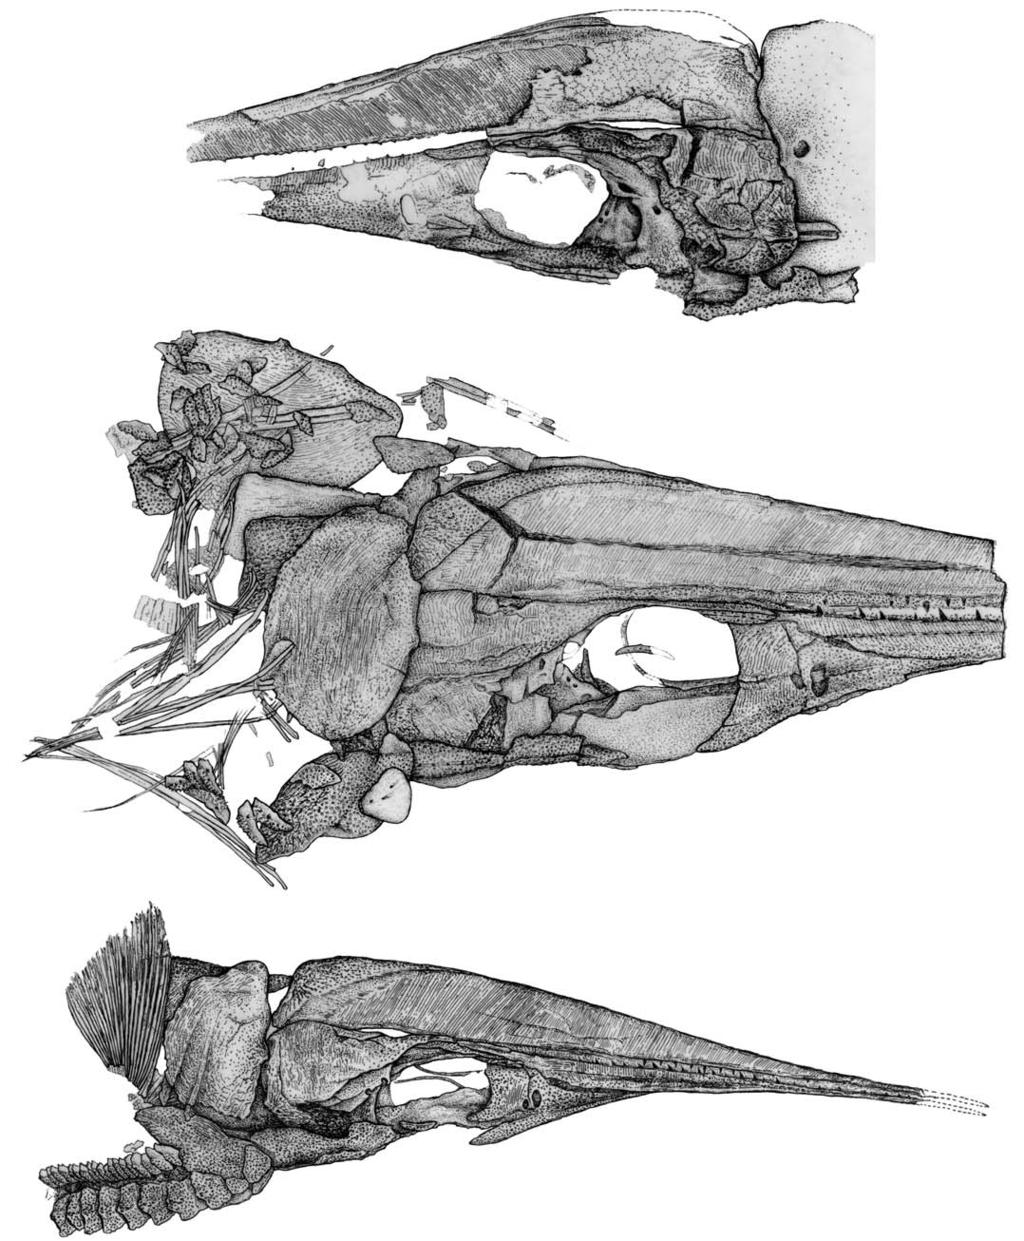 598 ACTA PALAEONTOLOGICA POLONICA 56 (3), 2011 Fig. 12. Line drawings of skulls of Sinosaurichthys longimedialis gen. et sp. nov.